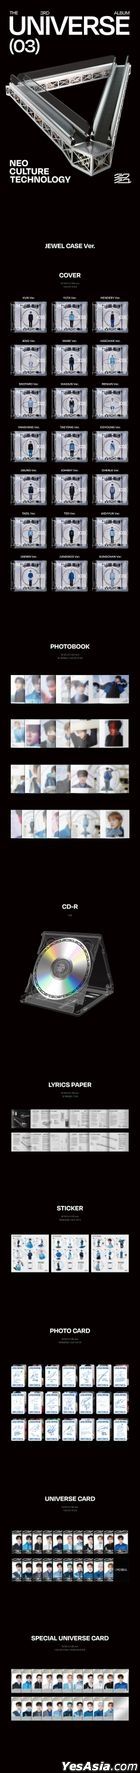 NCT Vol. 3 - Universe (Jewel Case Version) (Jae Min Version) + Poster in Tube